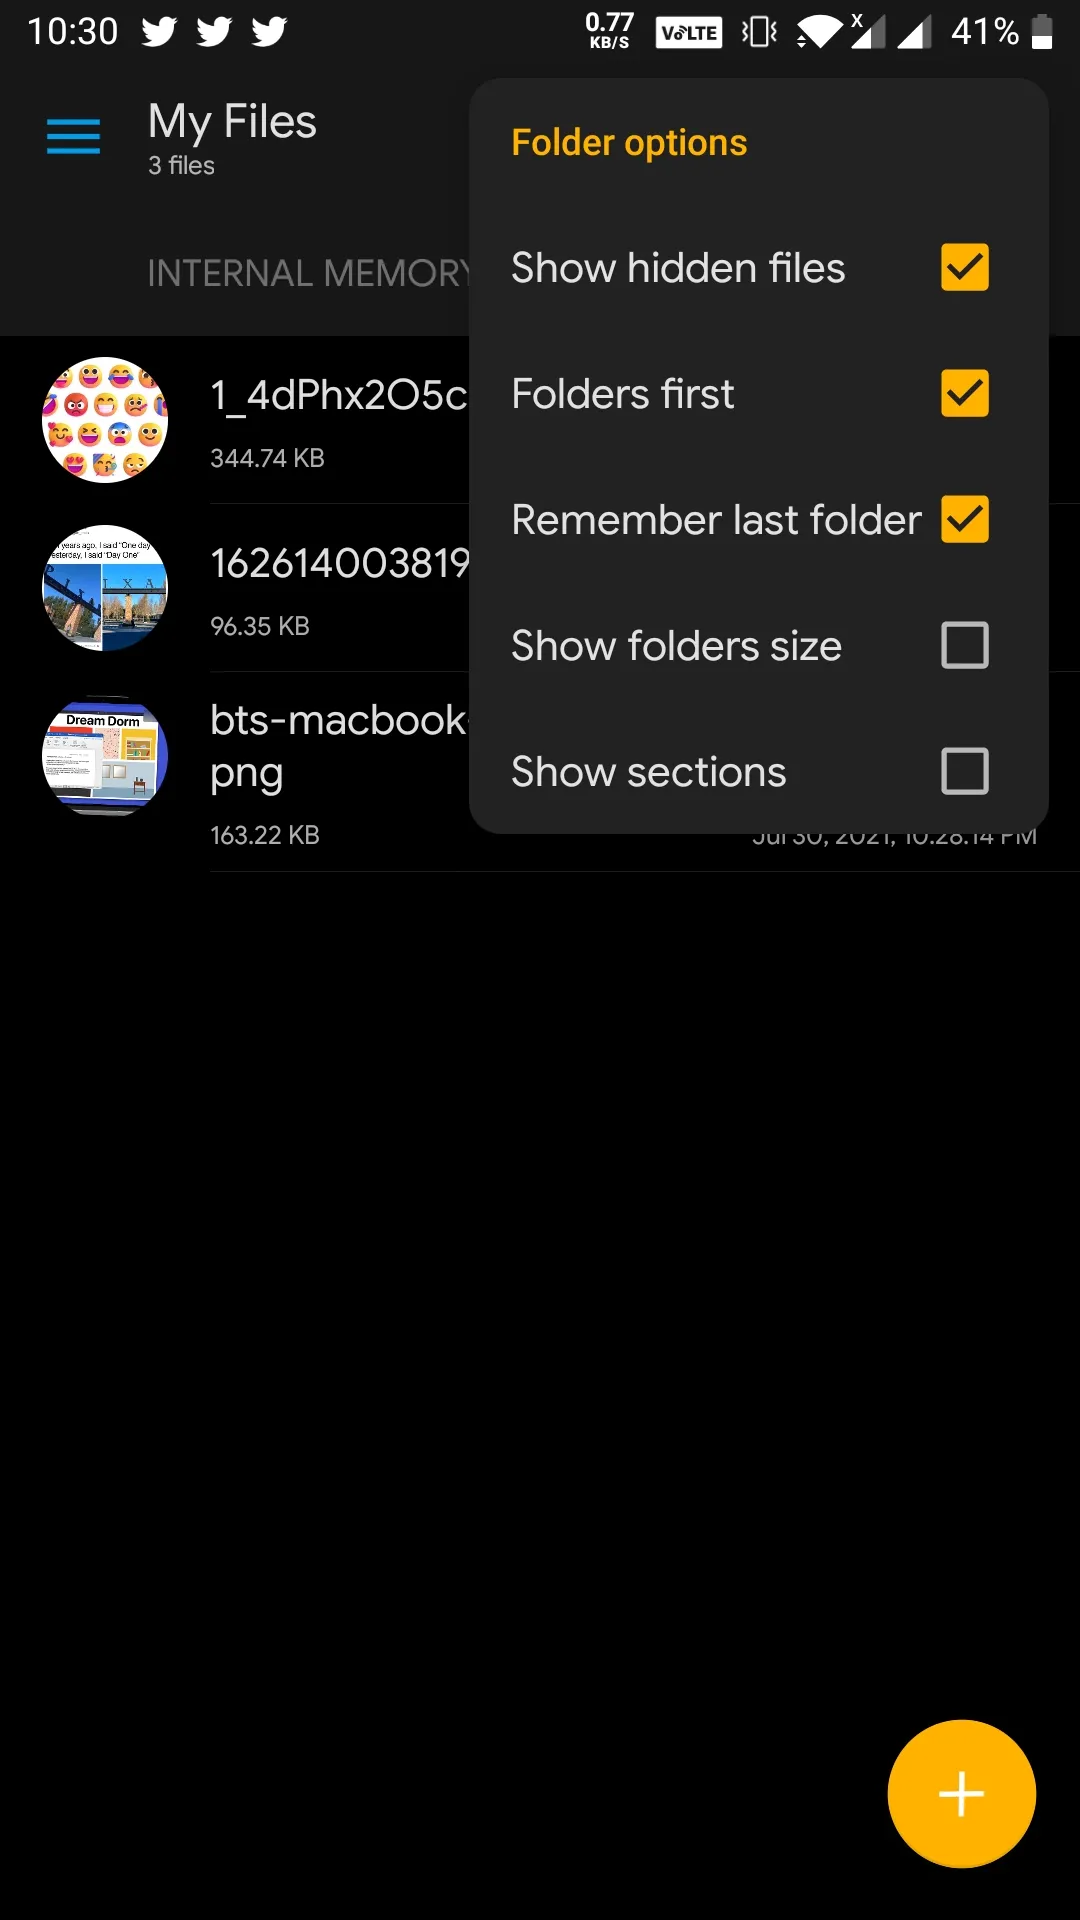 View Hidden Files and Folders in Solid Explorer - 02